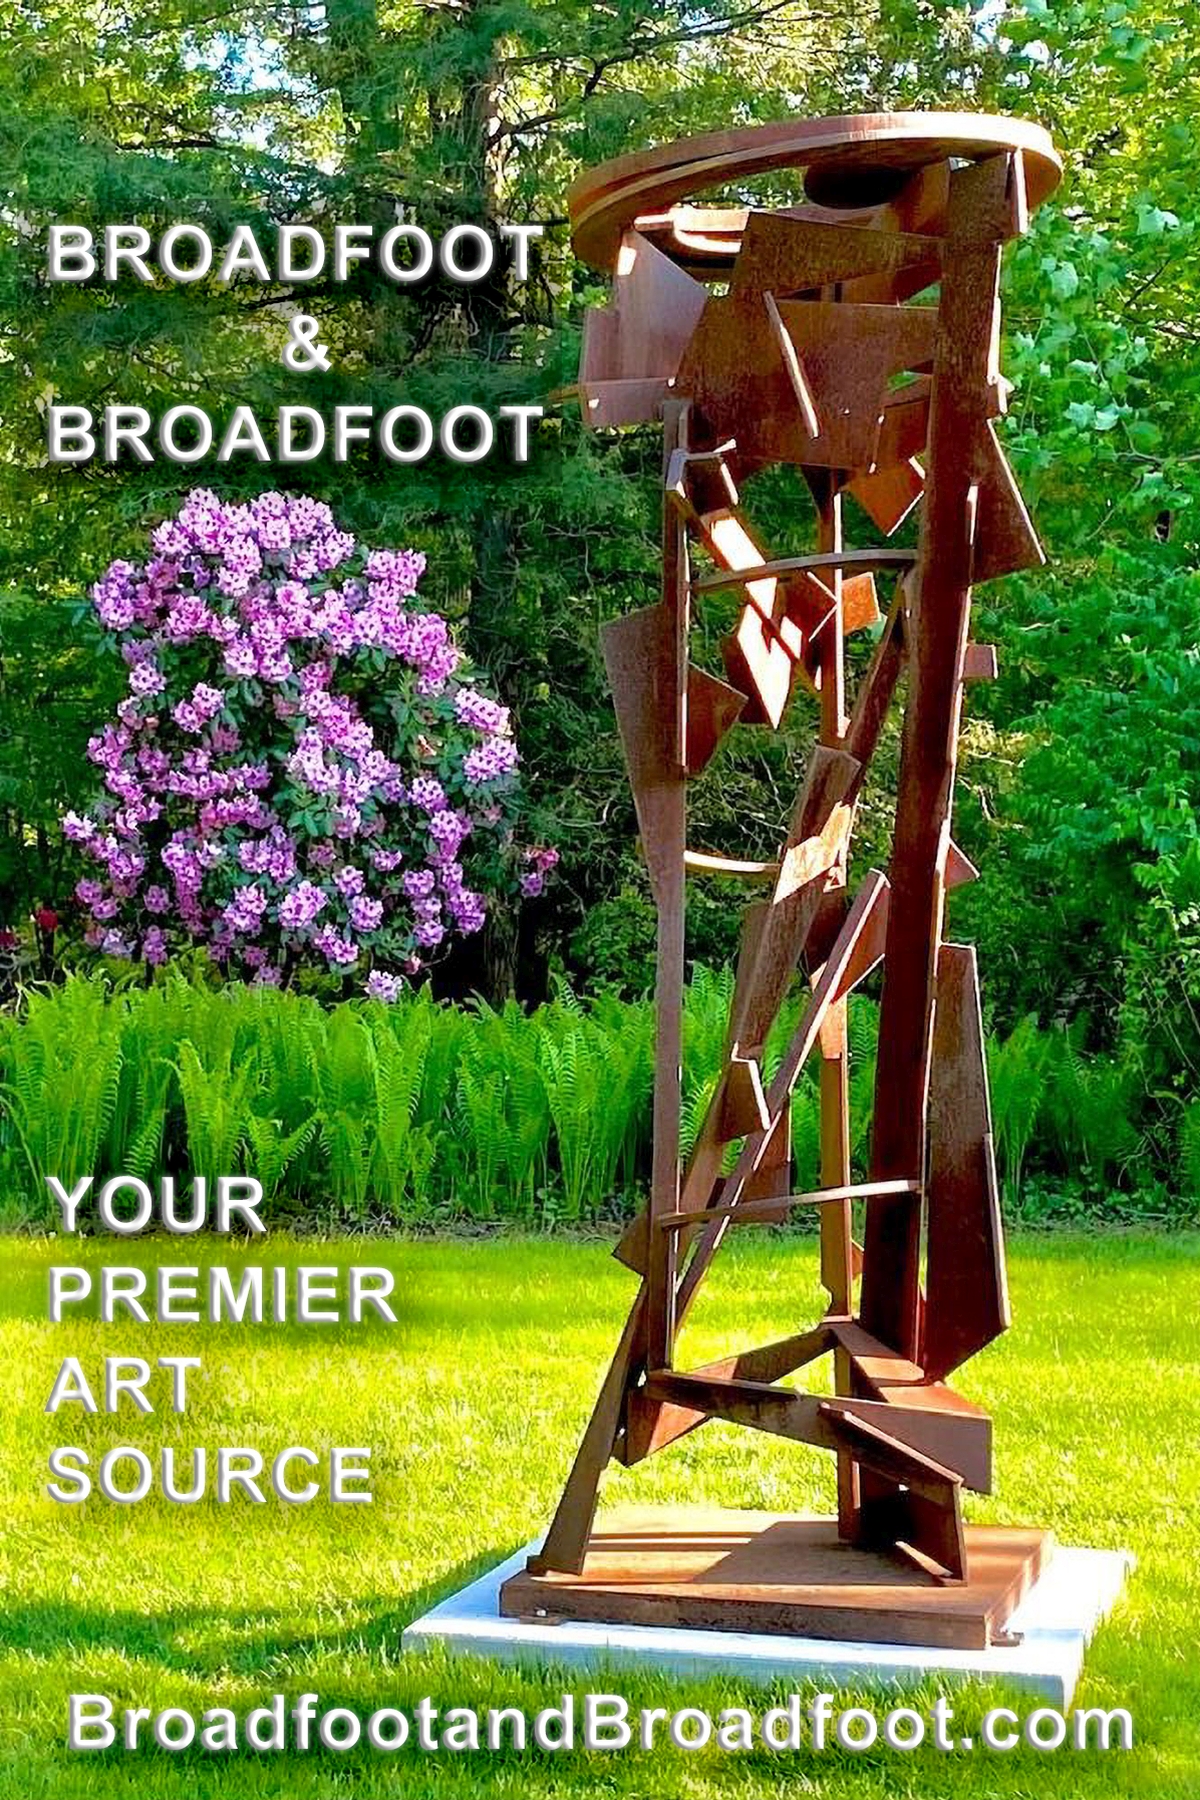 Broadfoot & Broadfoot